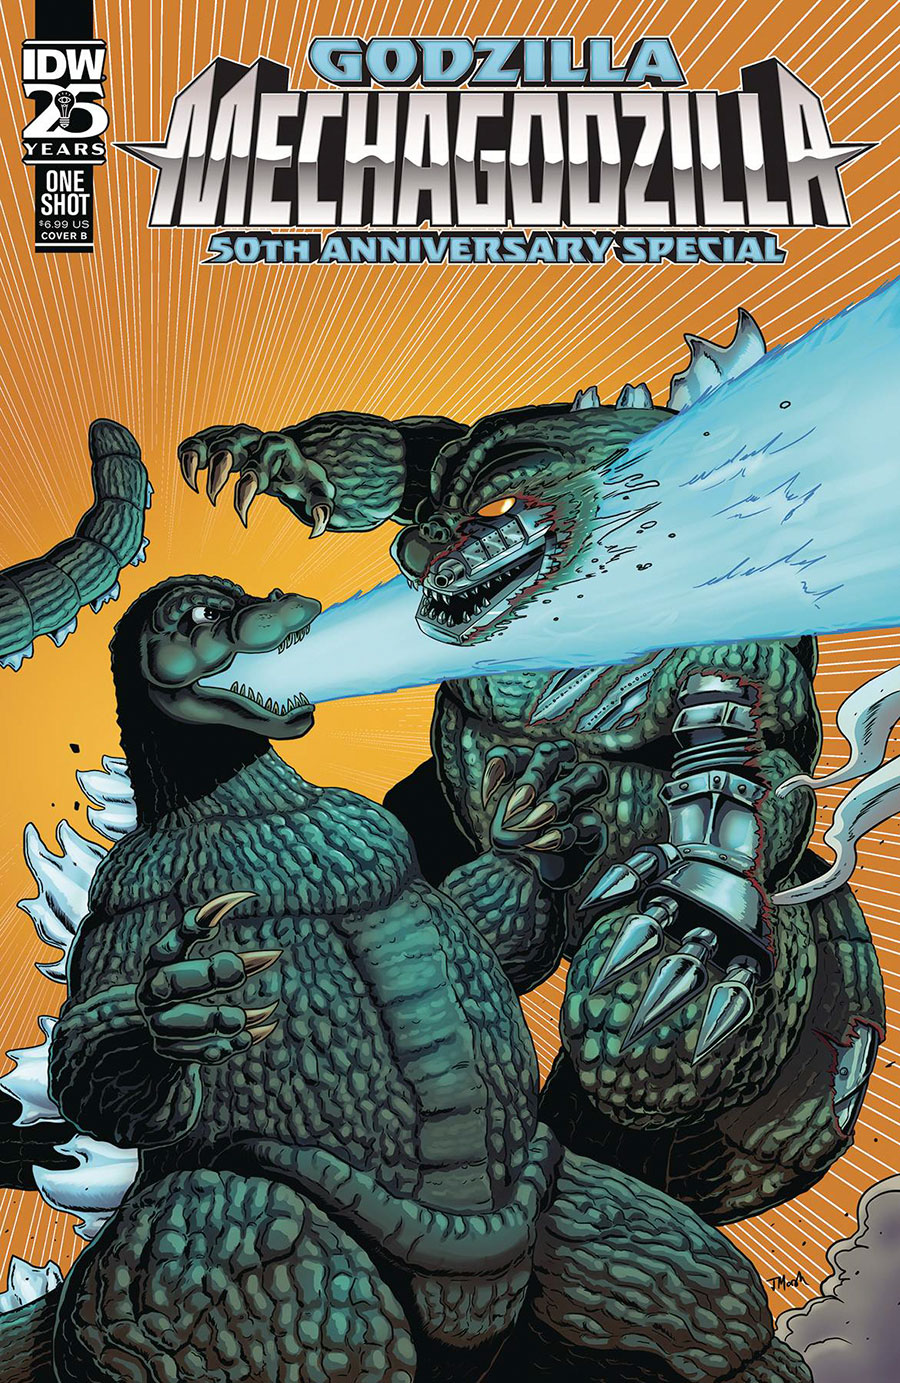 Godzilla Mechagodzilla 50th Anniversary Special #1 (One Shot) Cover B Variant James Marsh Cover